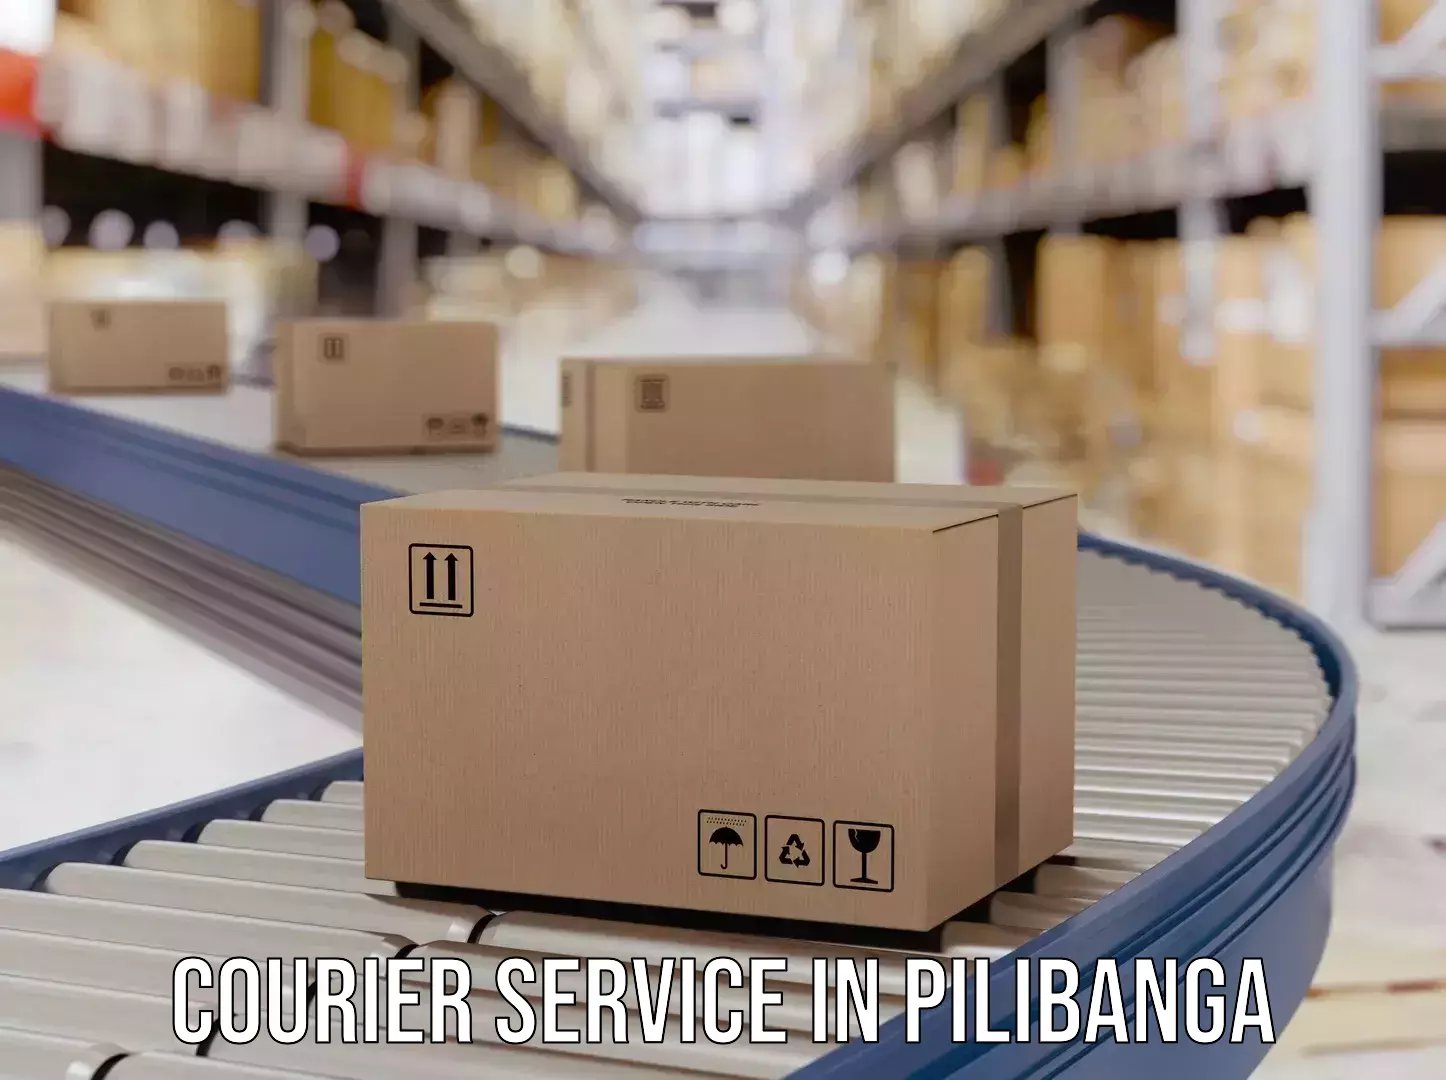 Tech-enabled shipping in Pilibanga